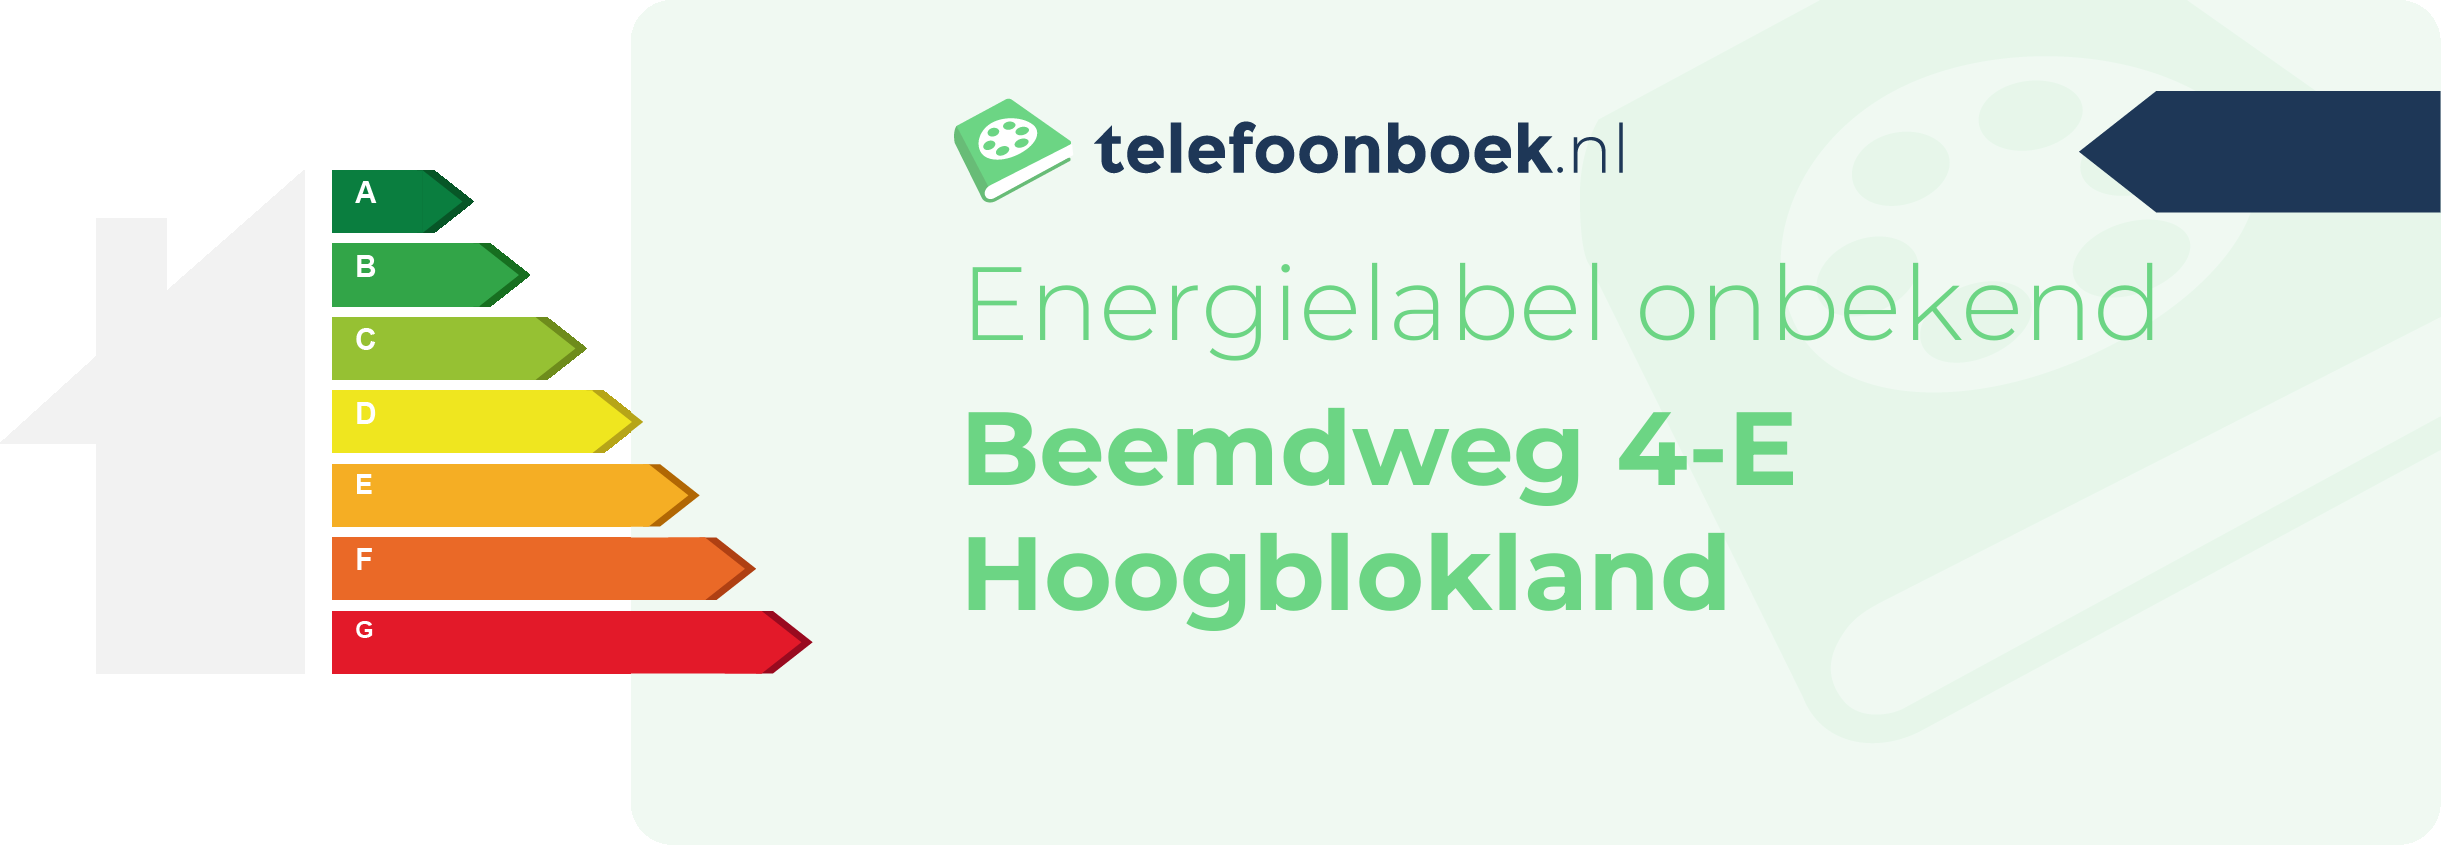 Energielabel Beemdweg 4-E Hoogblokland